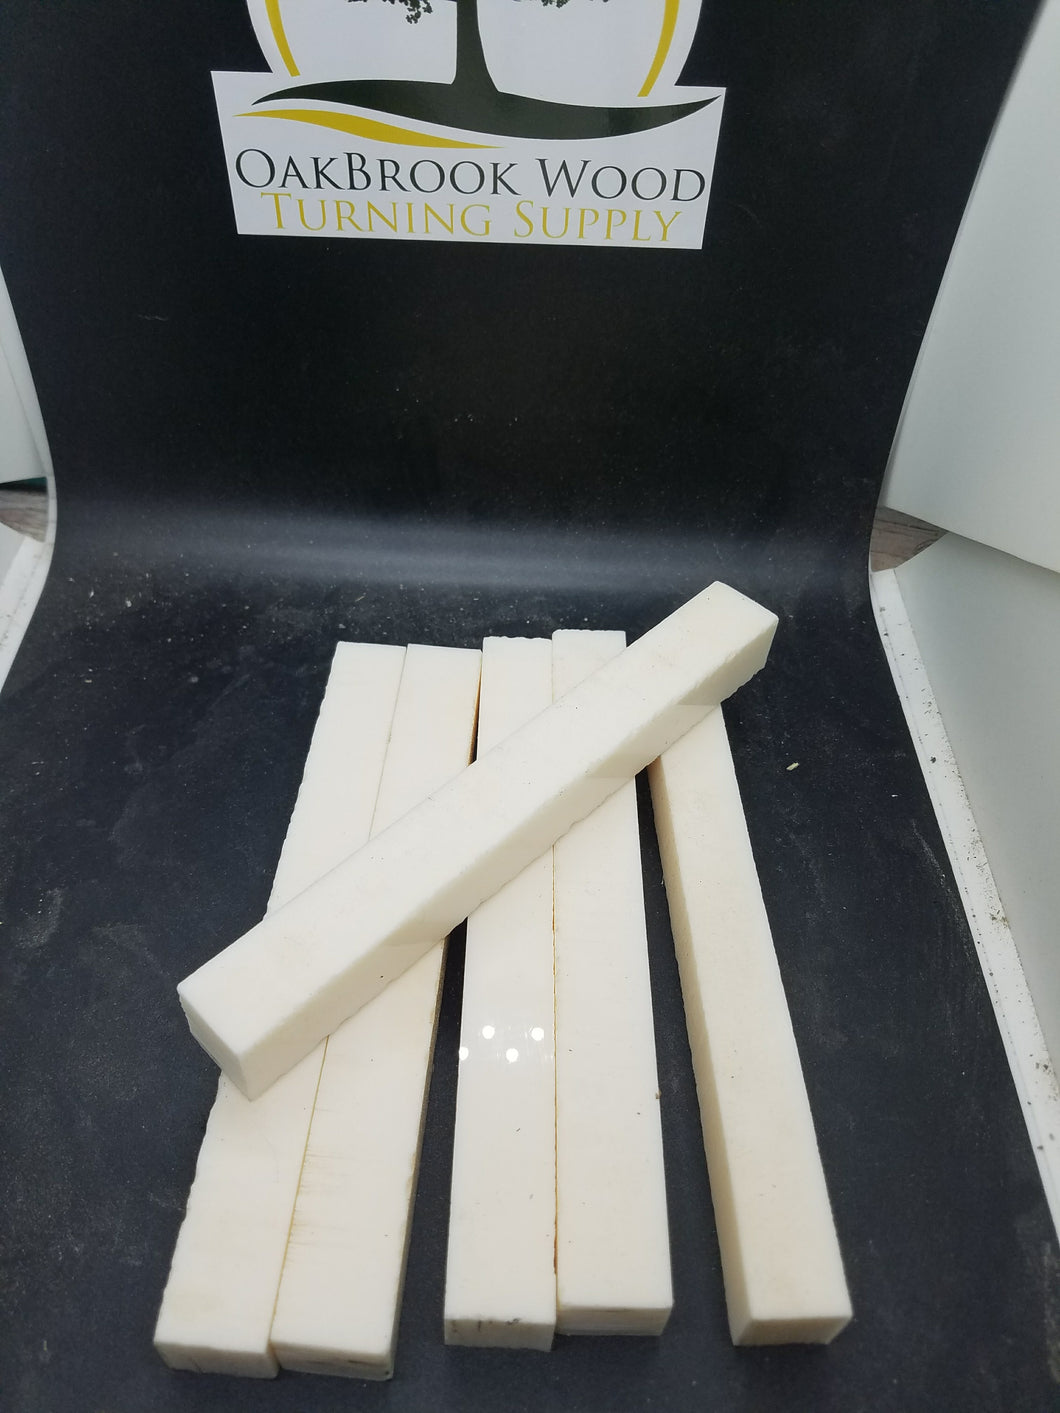 Acetate resin pen - Oakbrook Wood Turning Supply